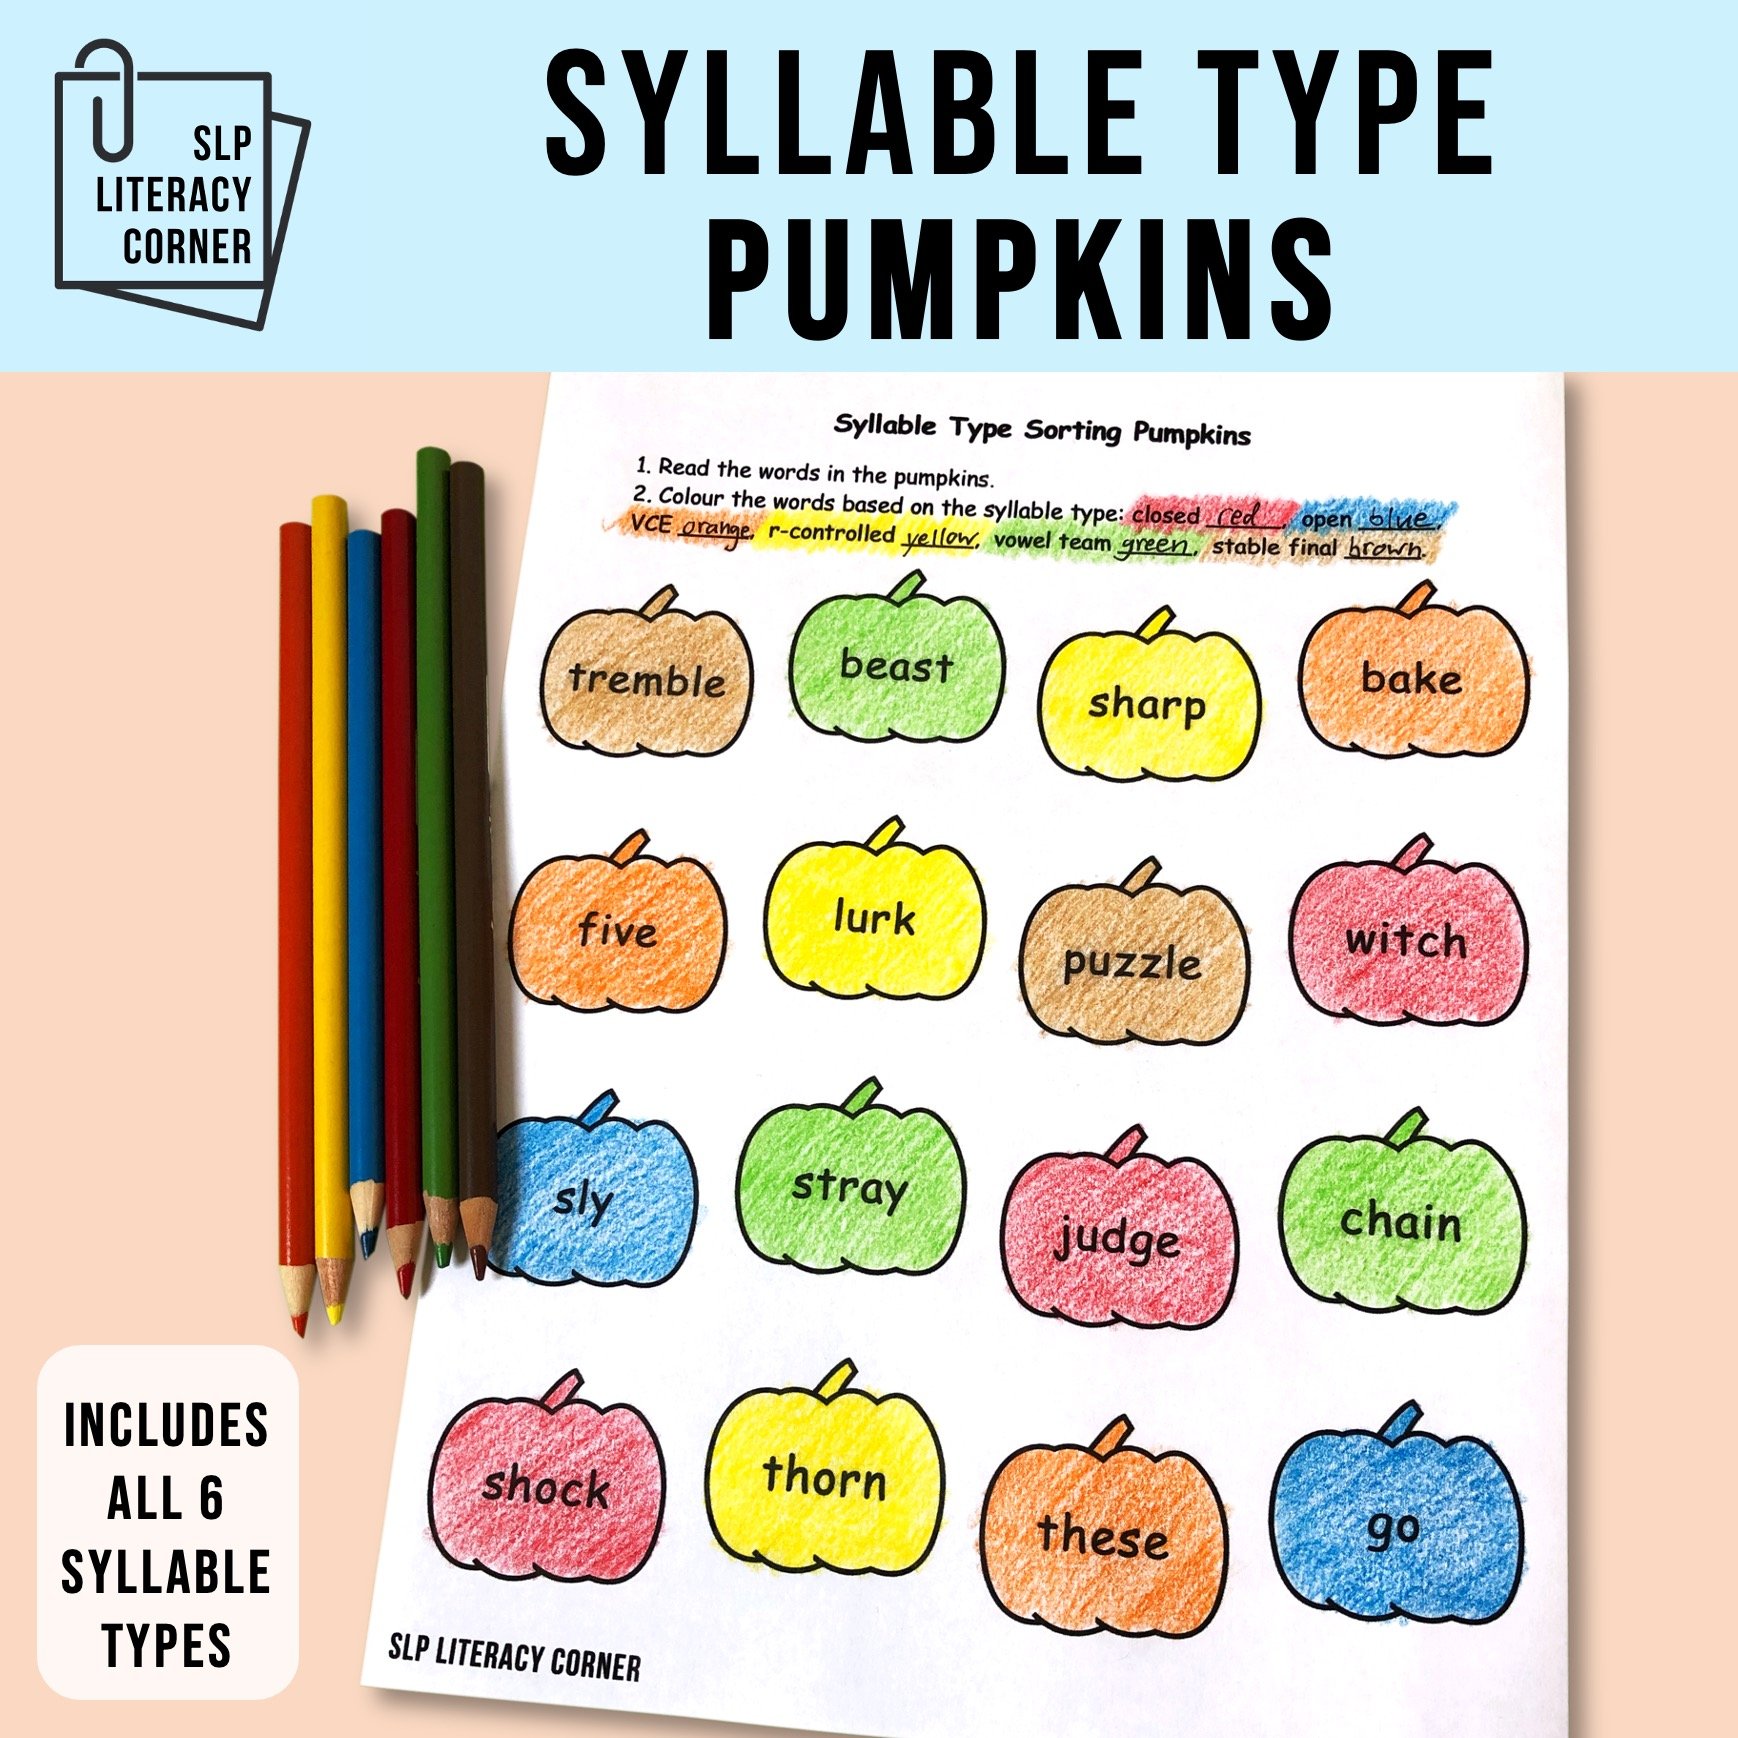 Syllable Type Pumpkins.jpeg